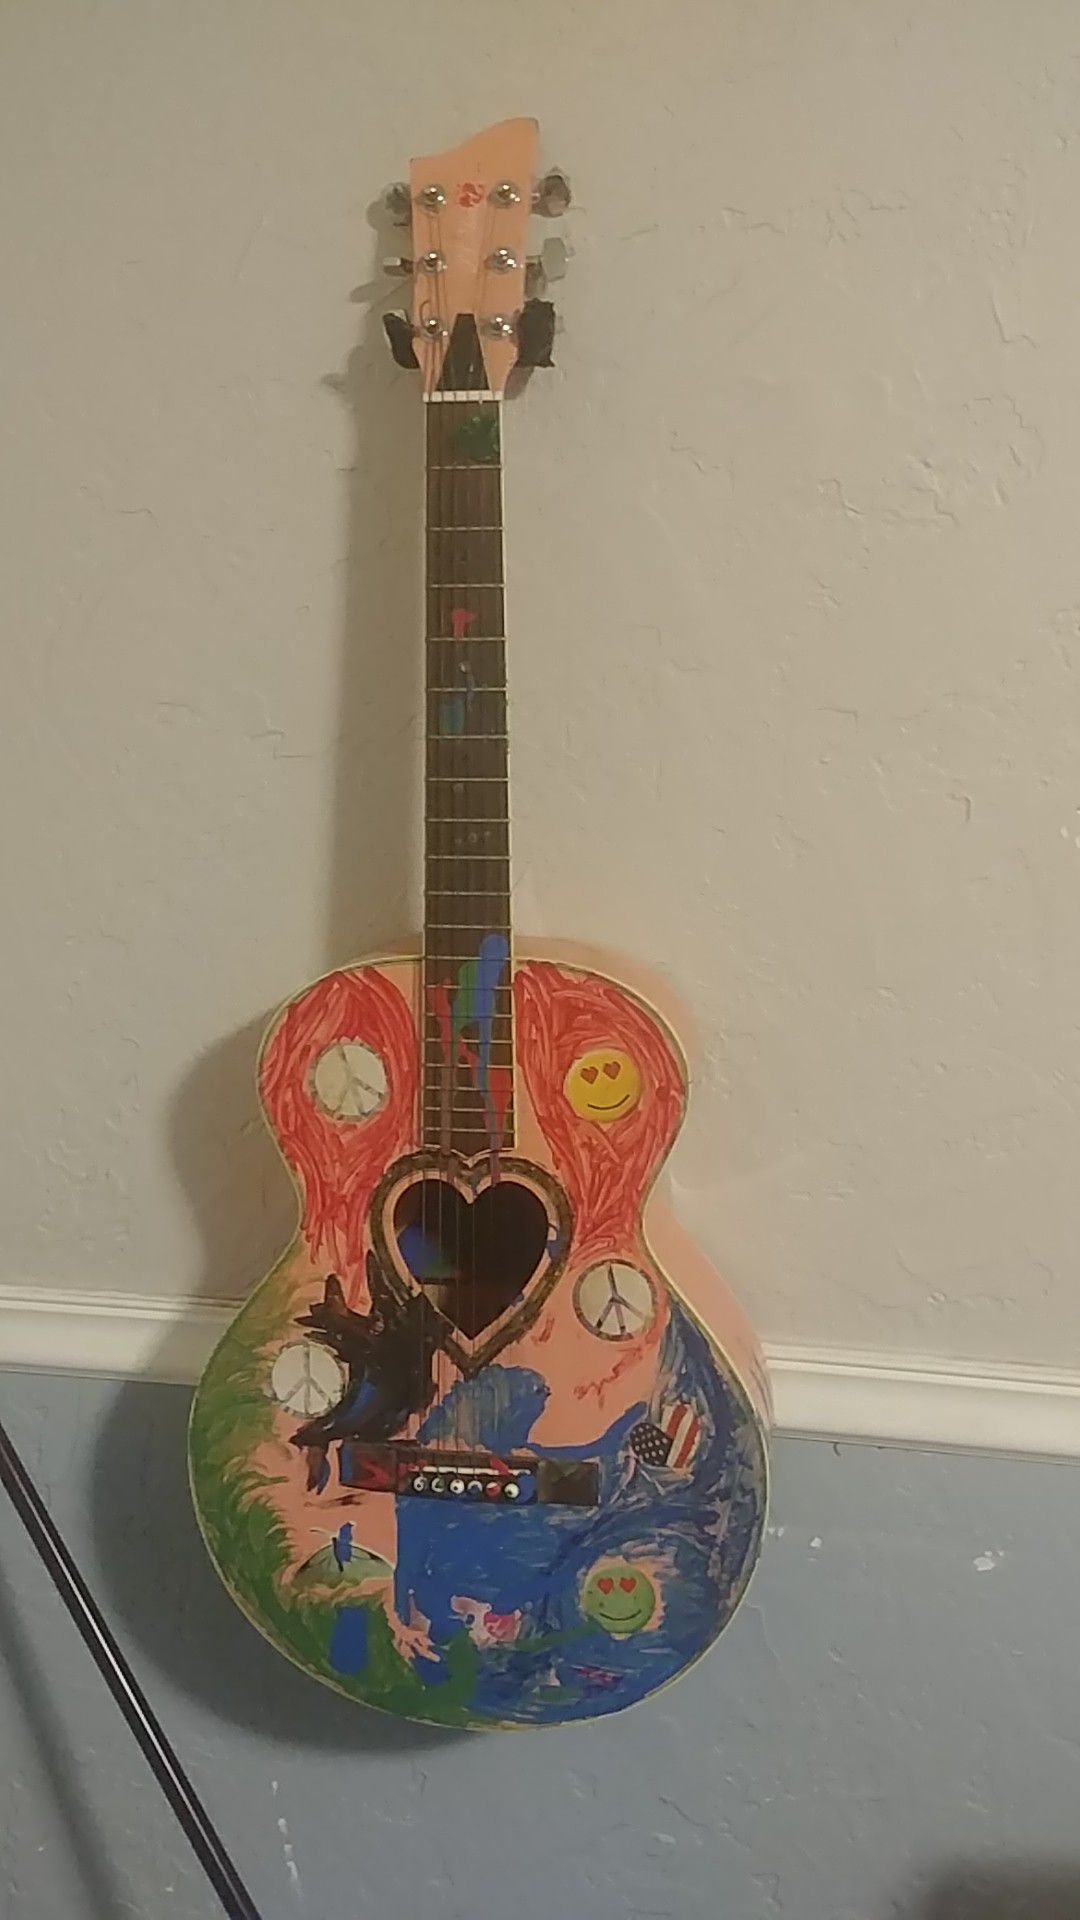 Child sized guitar